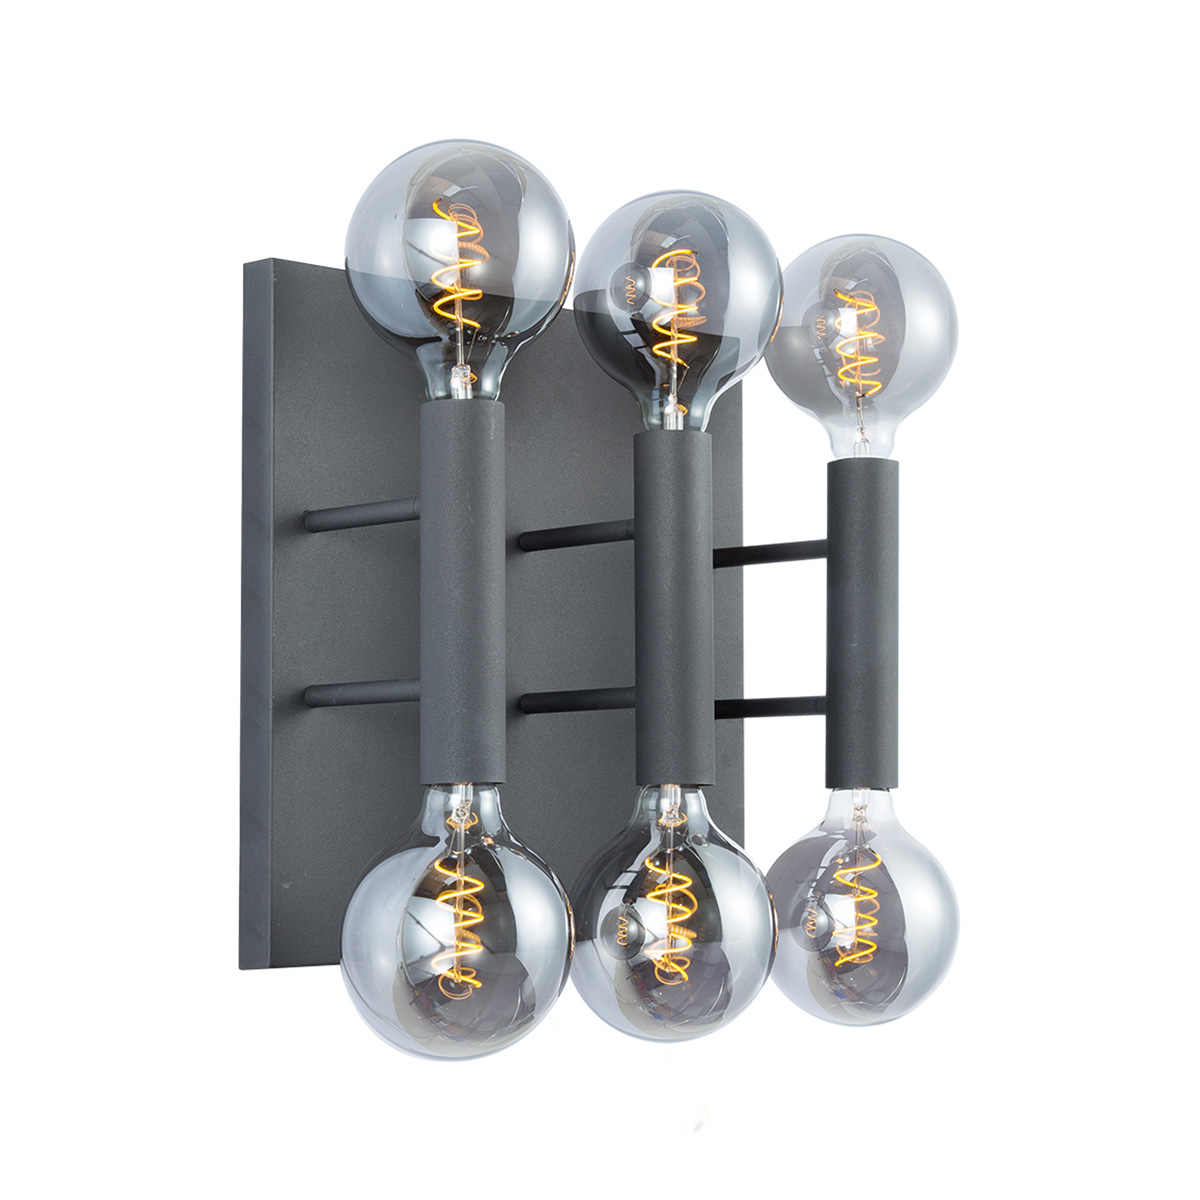 Tangla lighting - TLW5010-06SB - LED wall lamp 6 Lights - metal in sand black - pillar - E27